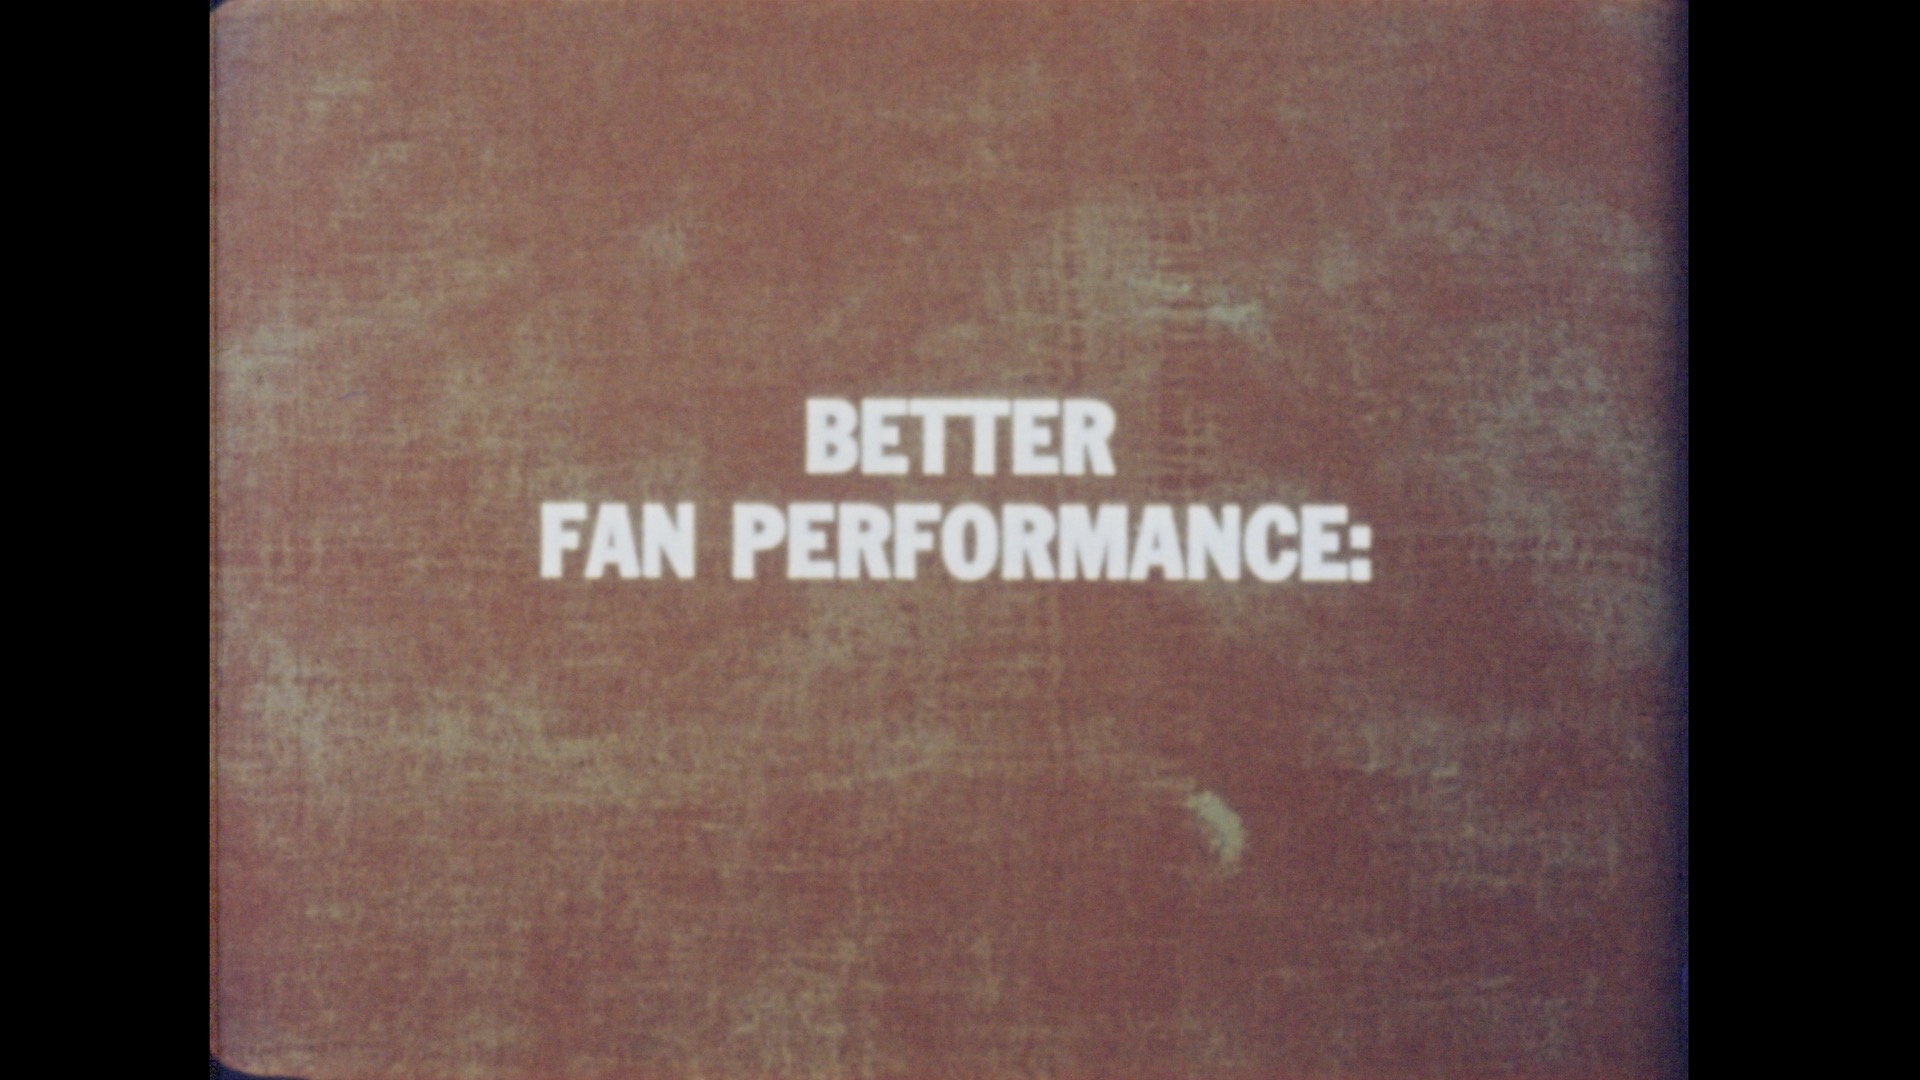 Better Fan Performance, circa 1960s